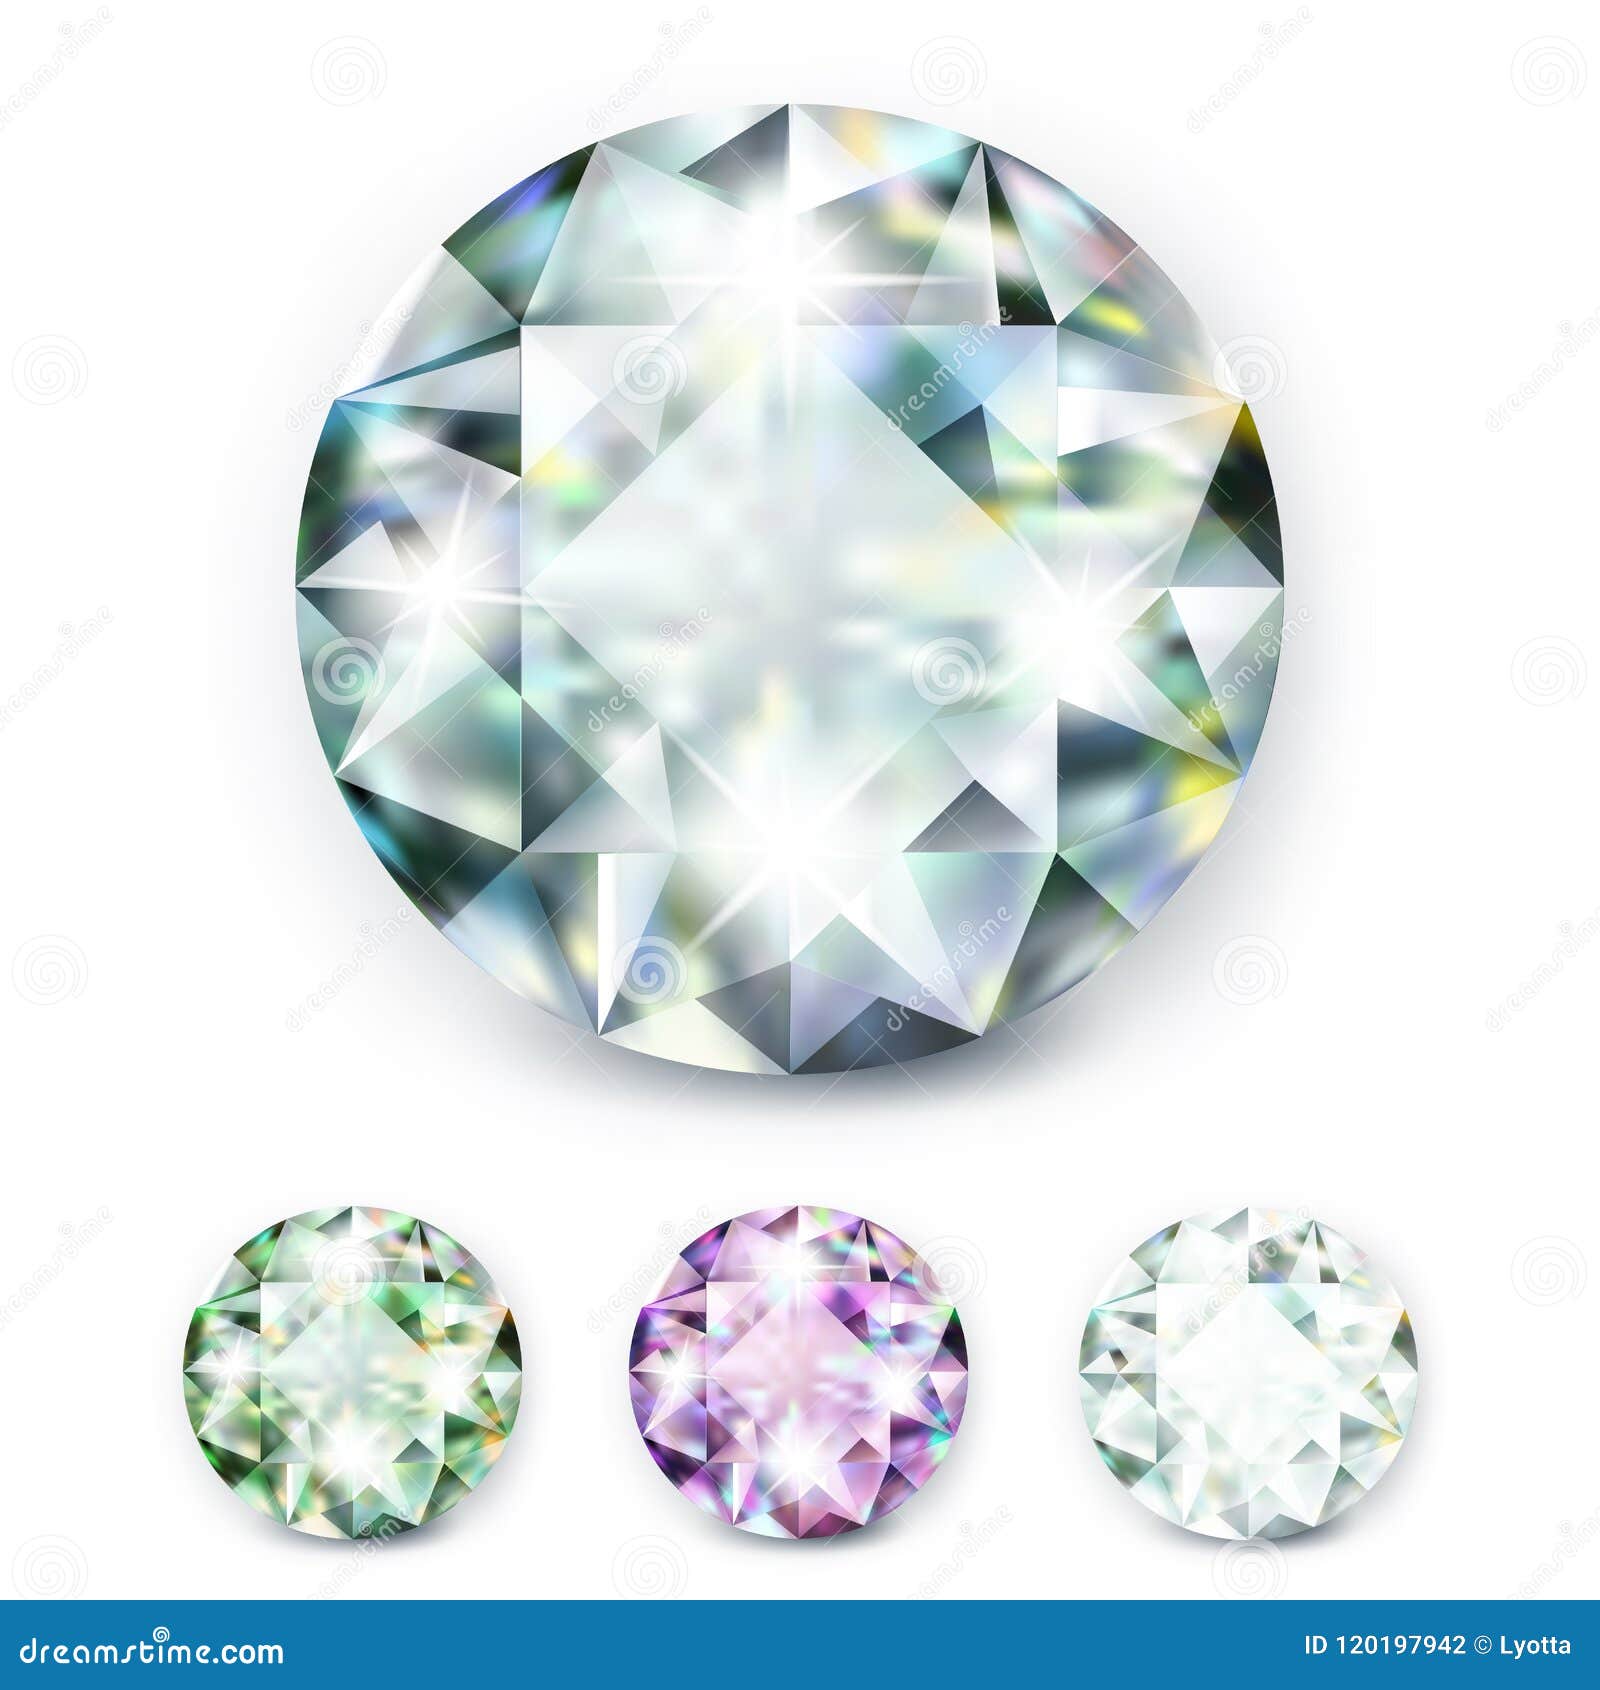 large colored jewelery diamonds with rhinestones and bright shine